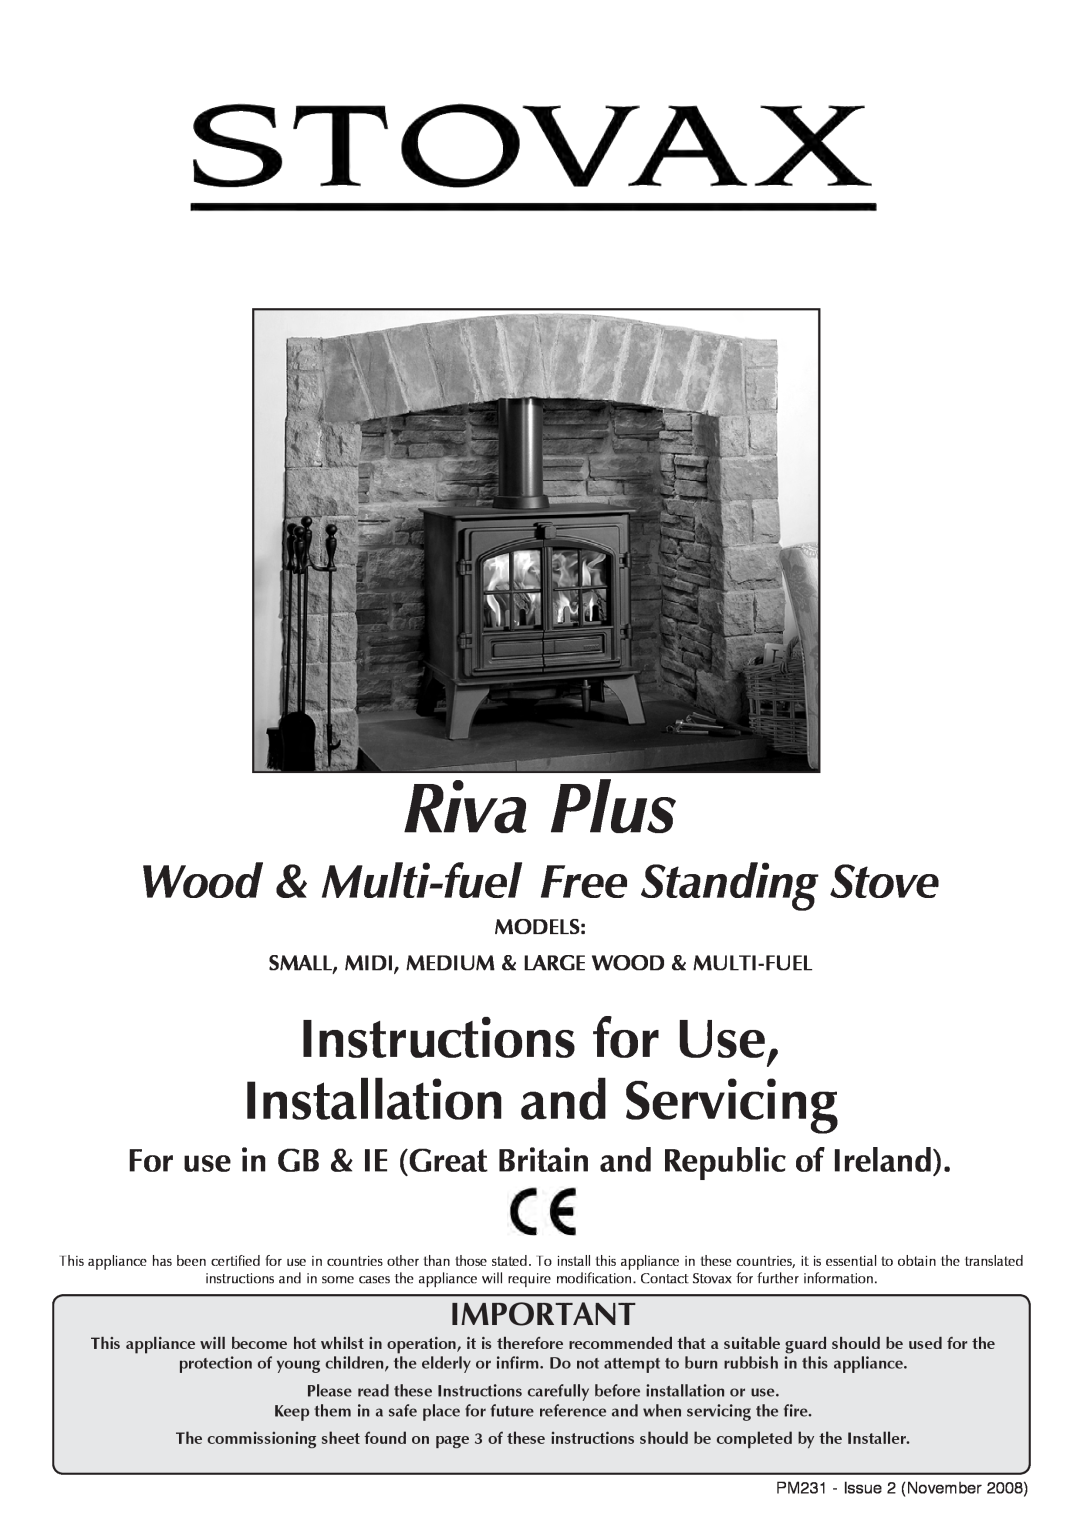 Stovax Large Wood & Multi-fuel manual Models, Small, Midi, Medium & Large Wood & Multi-Fuel, Riva Plus 